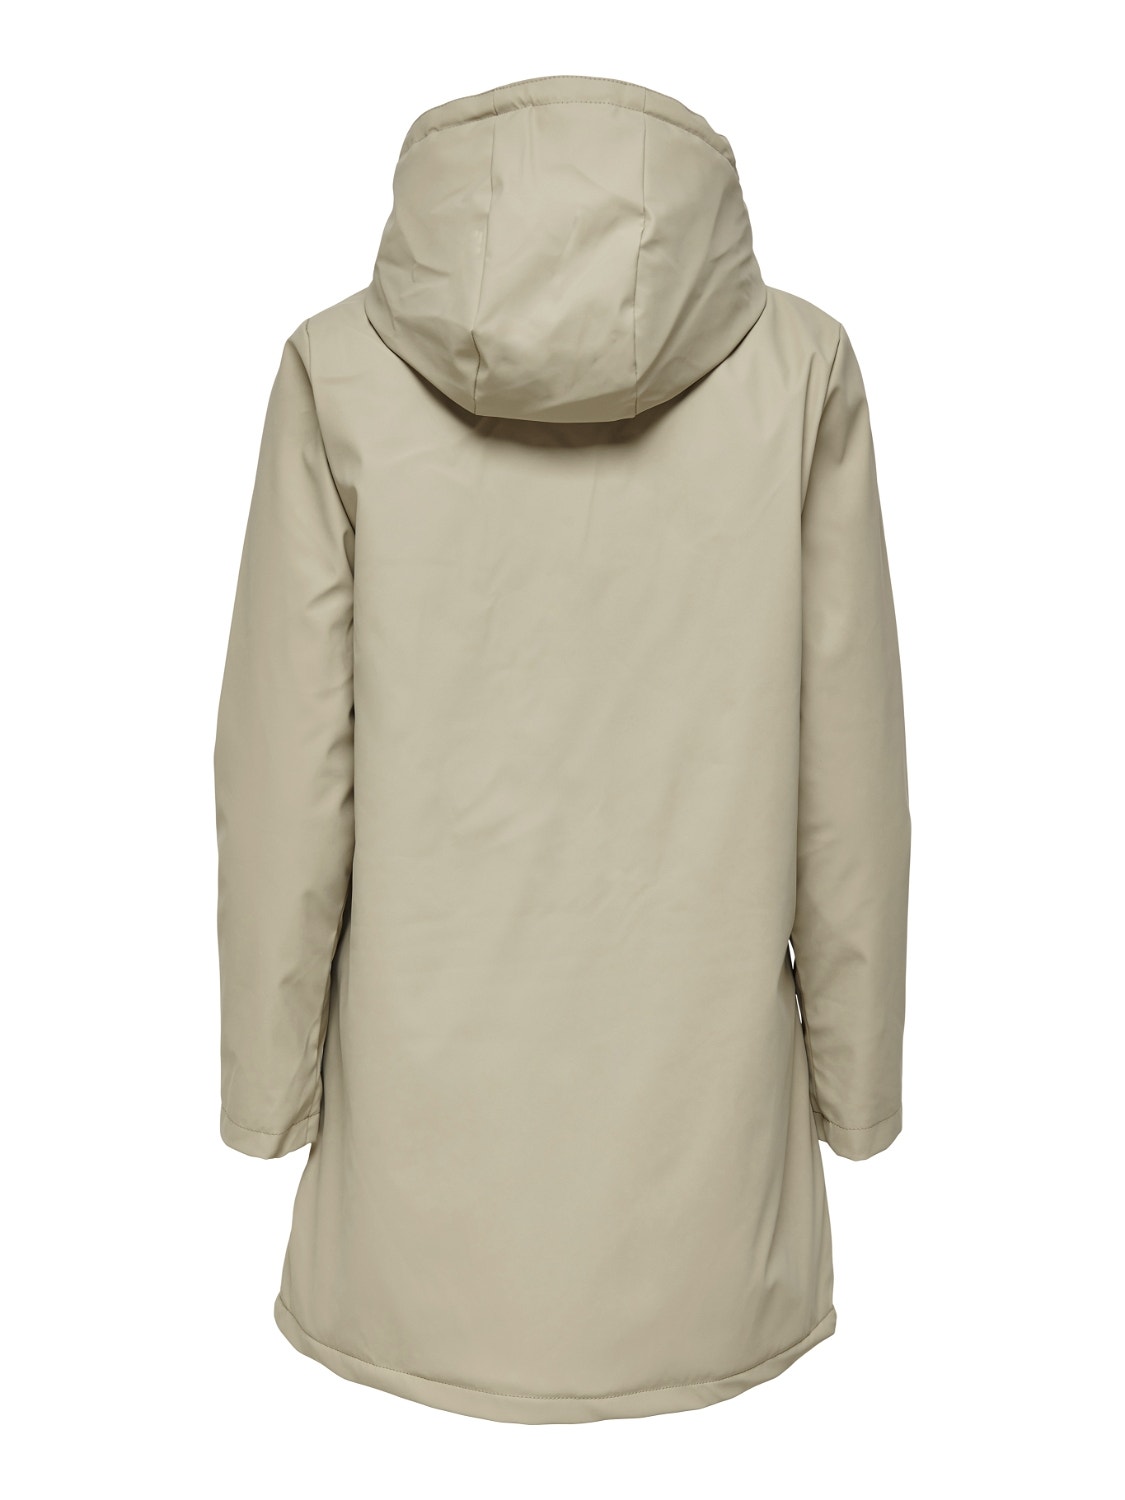 ONLY Rain jacket with teddy lining -Crockery - 15206116